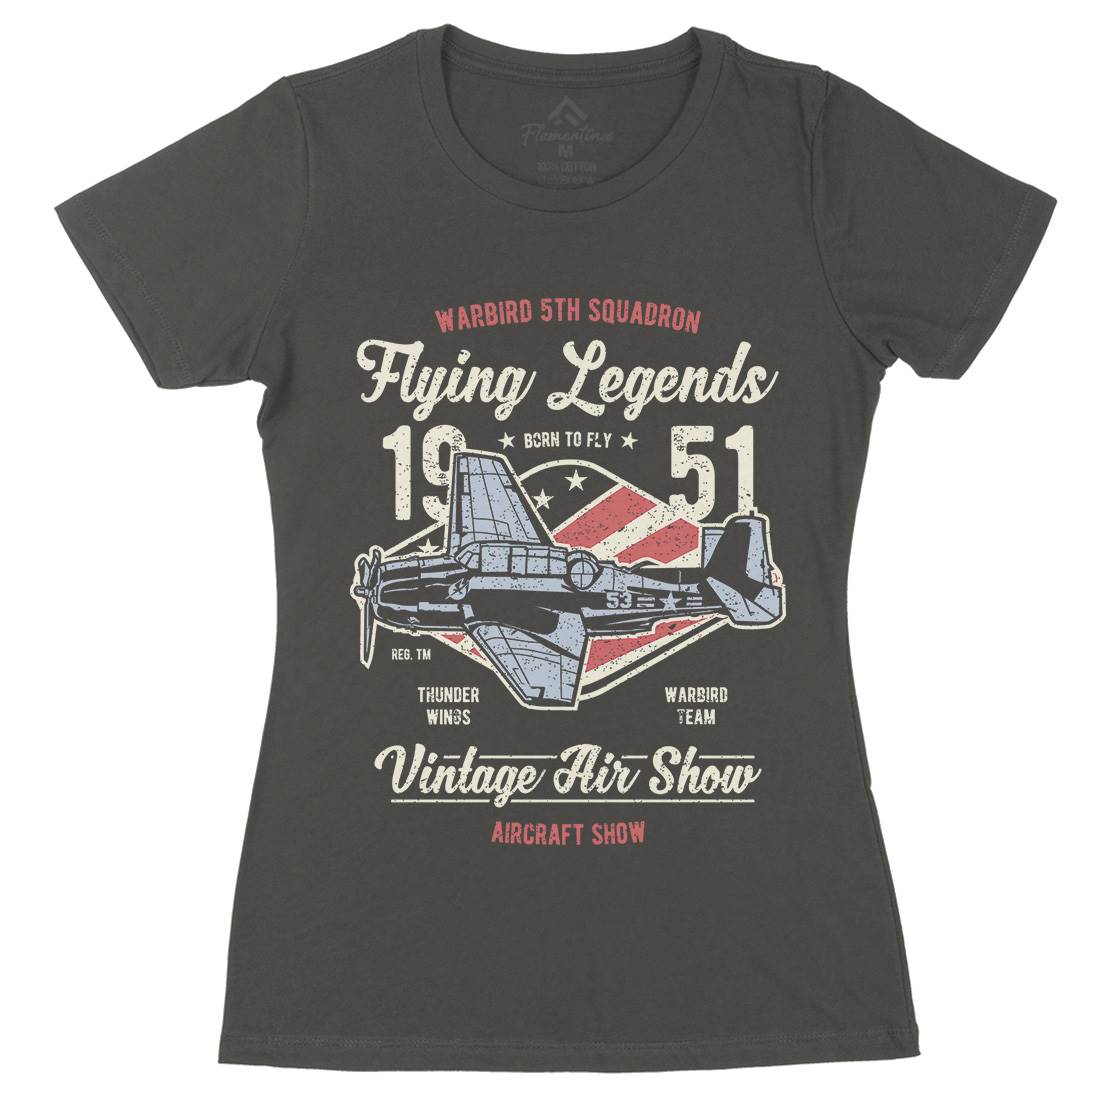 Flying Legends Womens Organic Crew Neck T-Shirt Vehicles A664